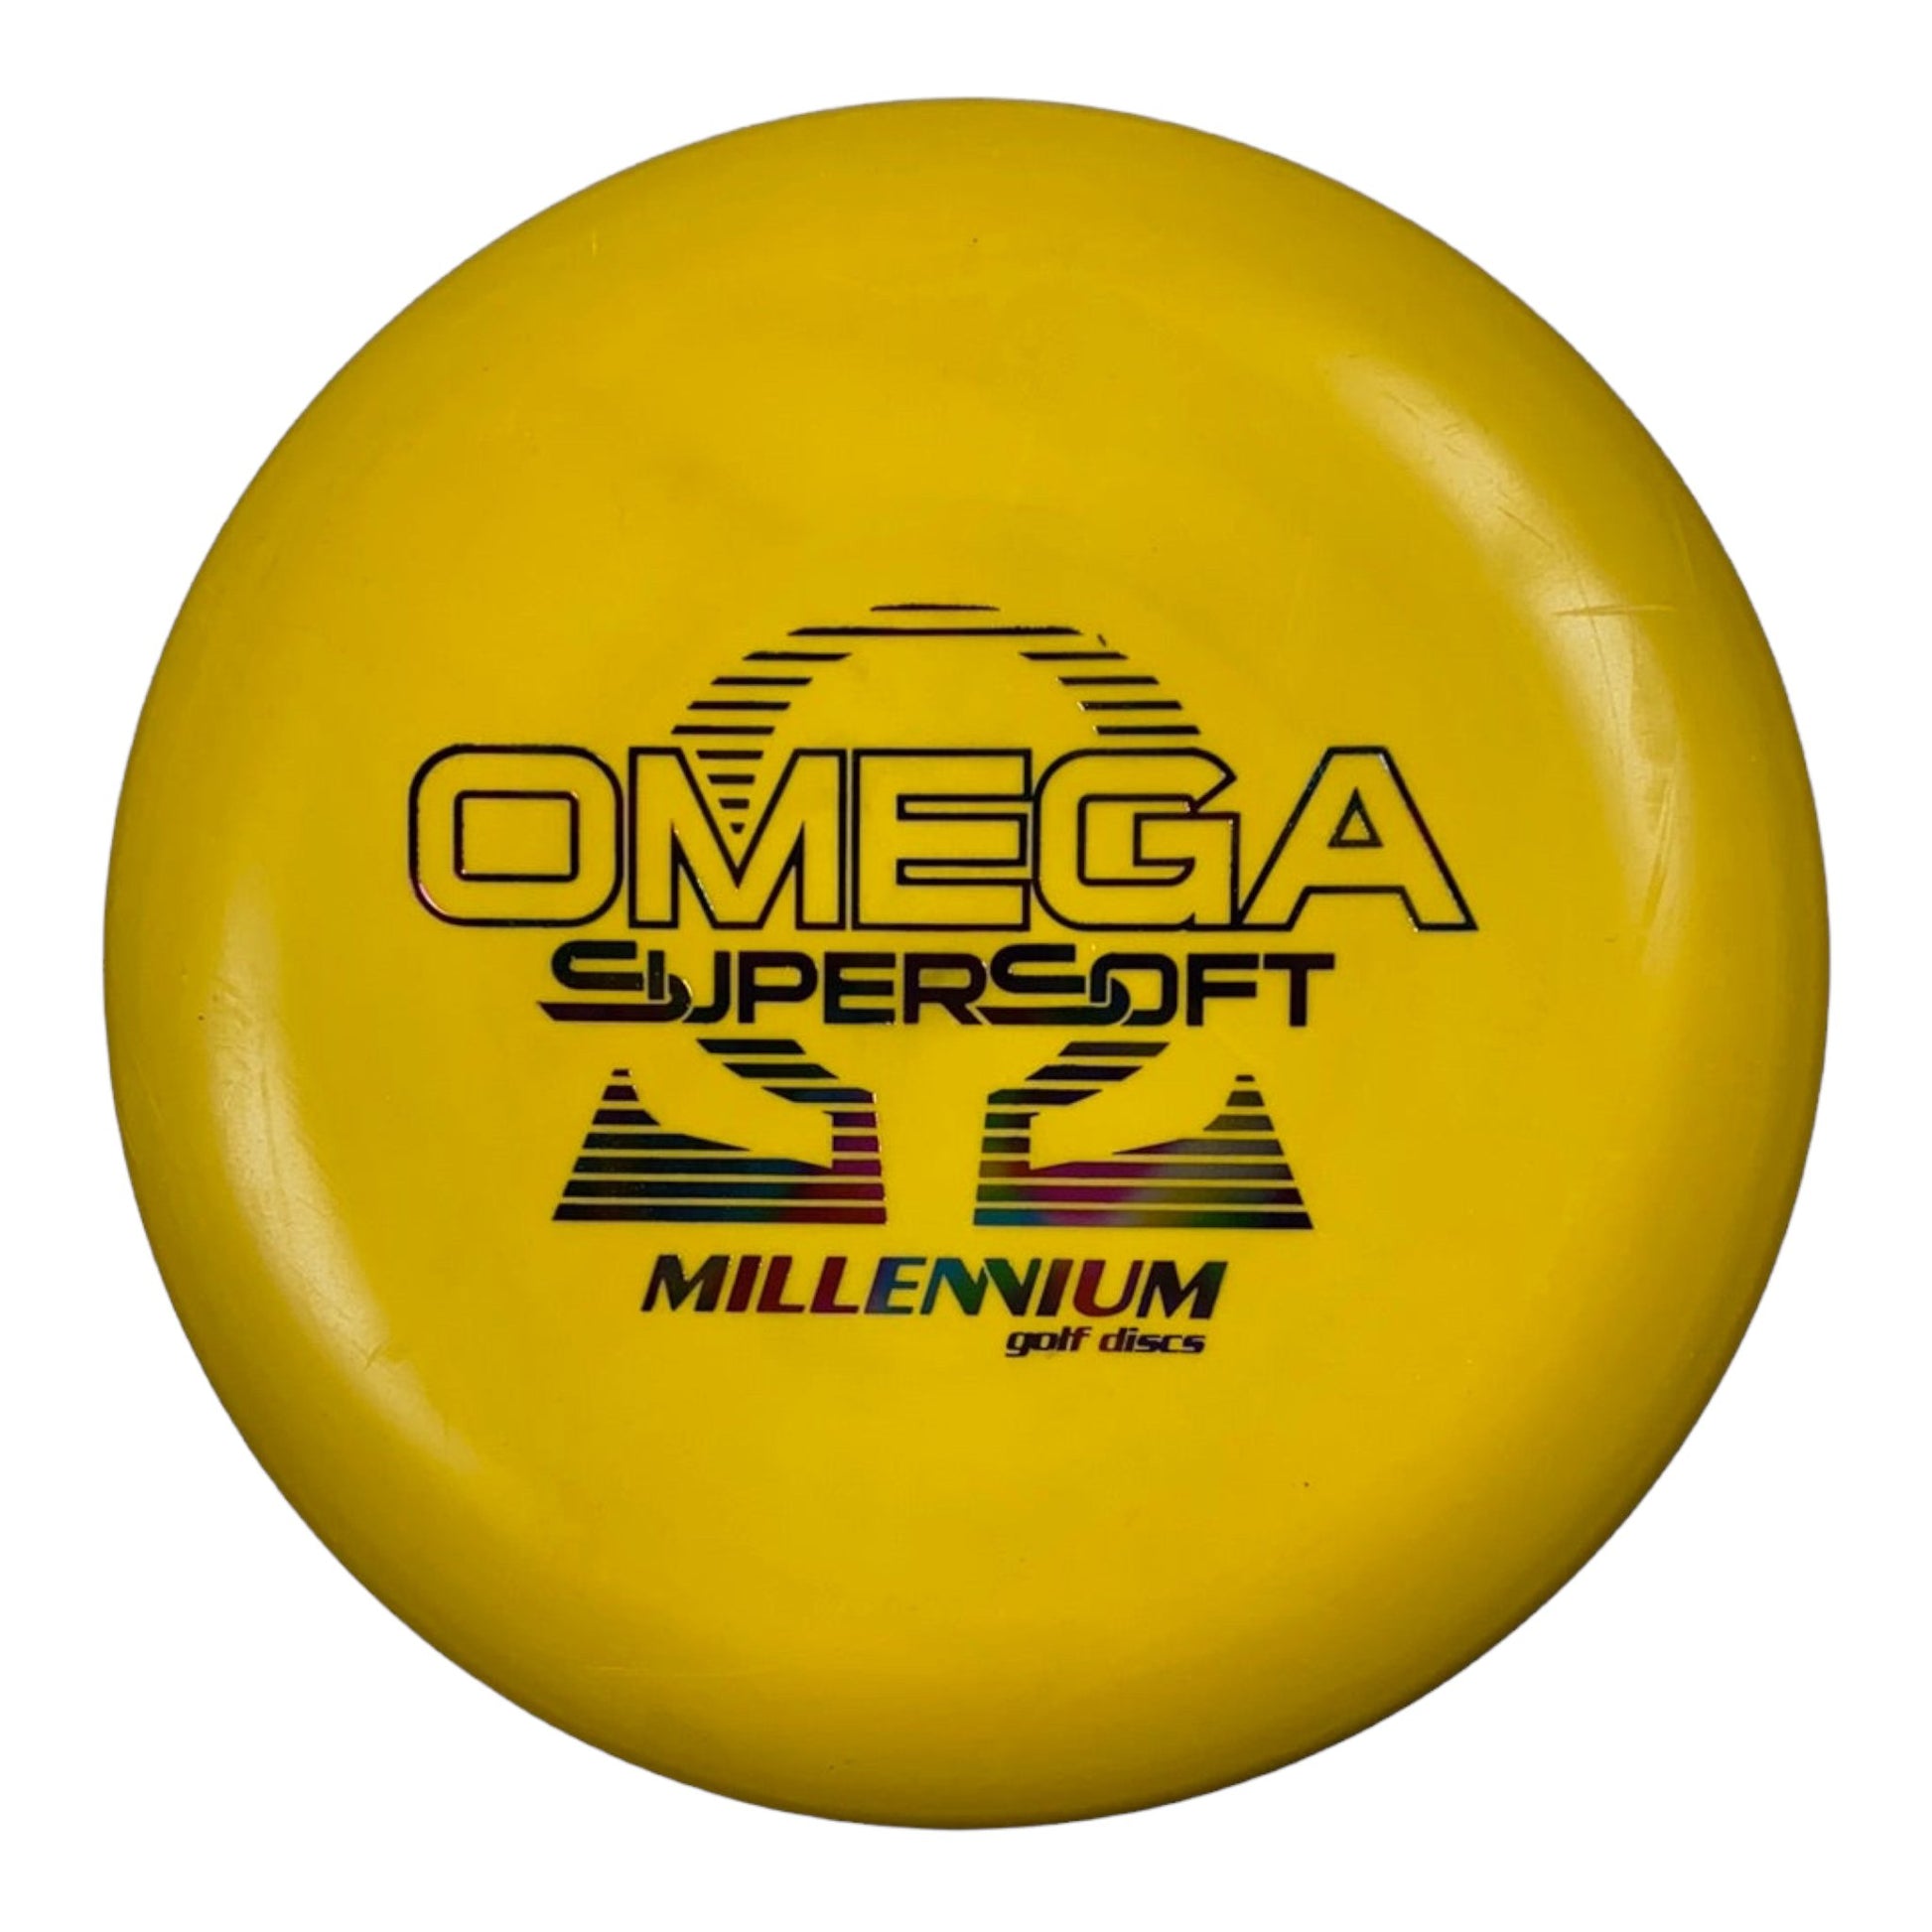 Millennium Golf Discs Omega | Supersoft | Gold/Rainbow 171g Disc Golf